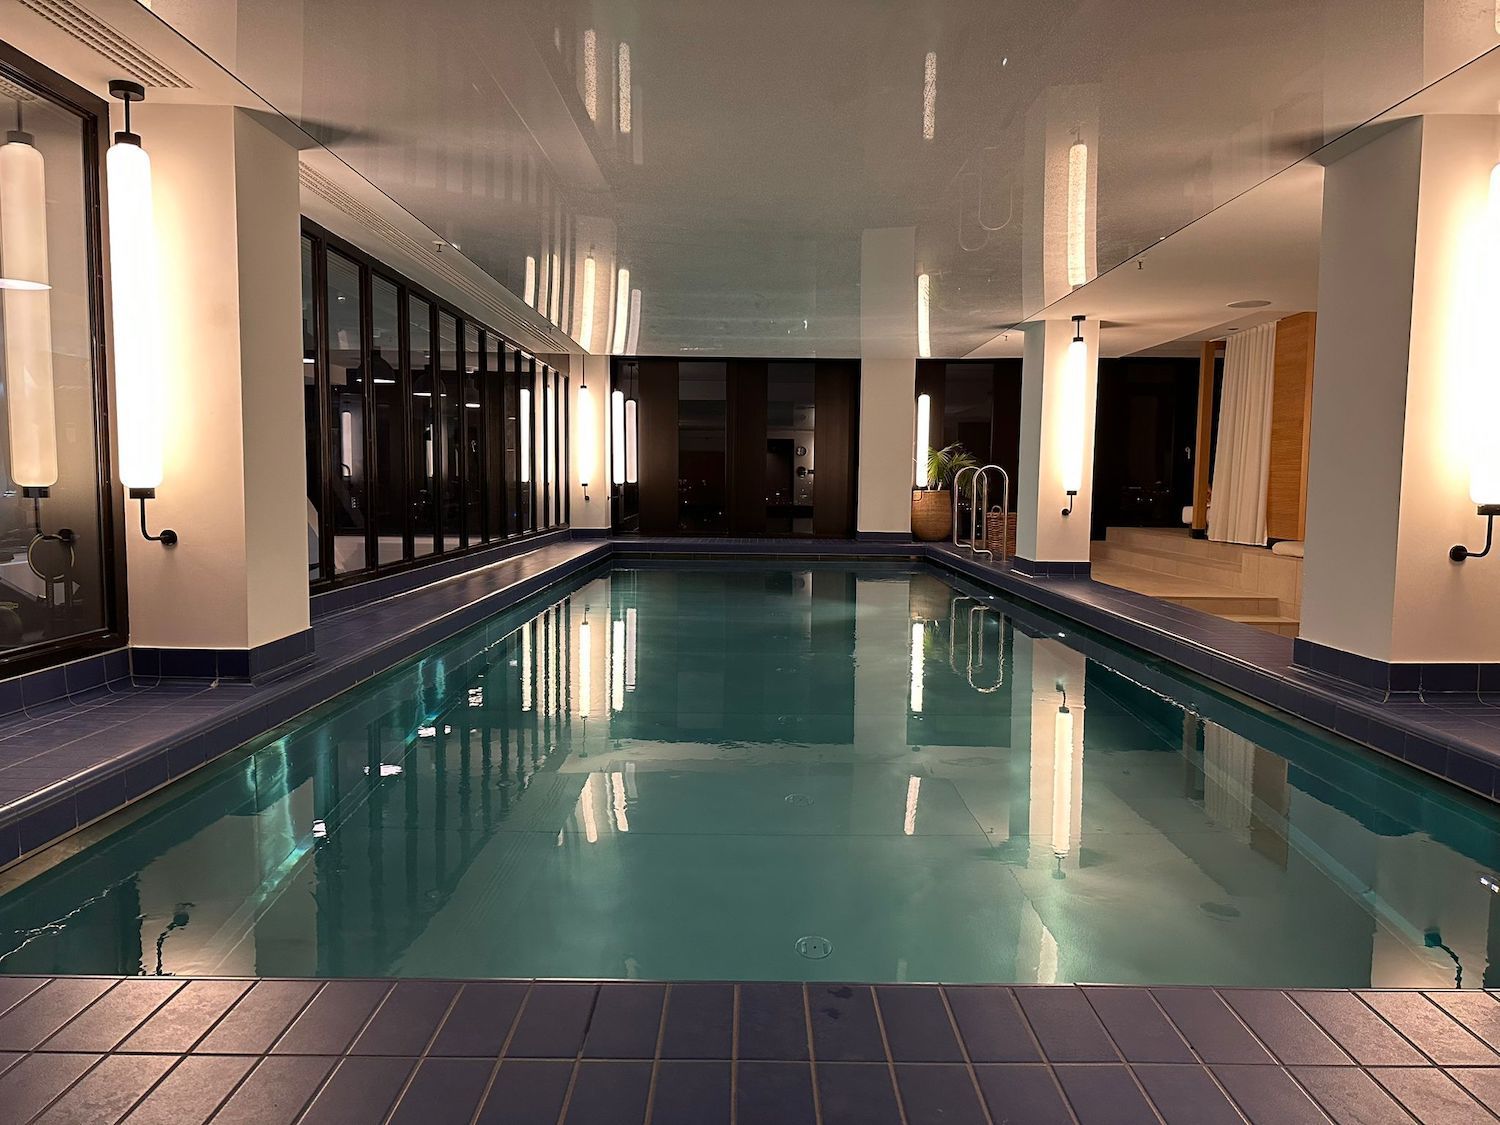 Adina Apartment Hotel München Fitness Pool Foto weiser lighting MW